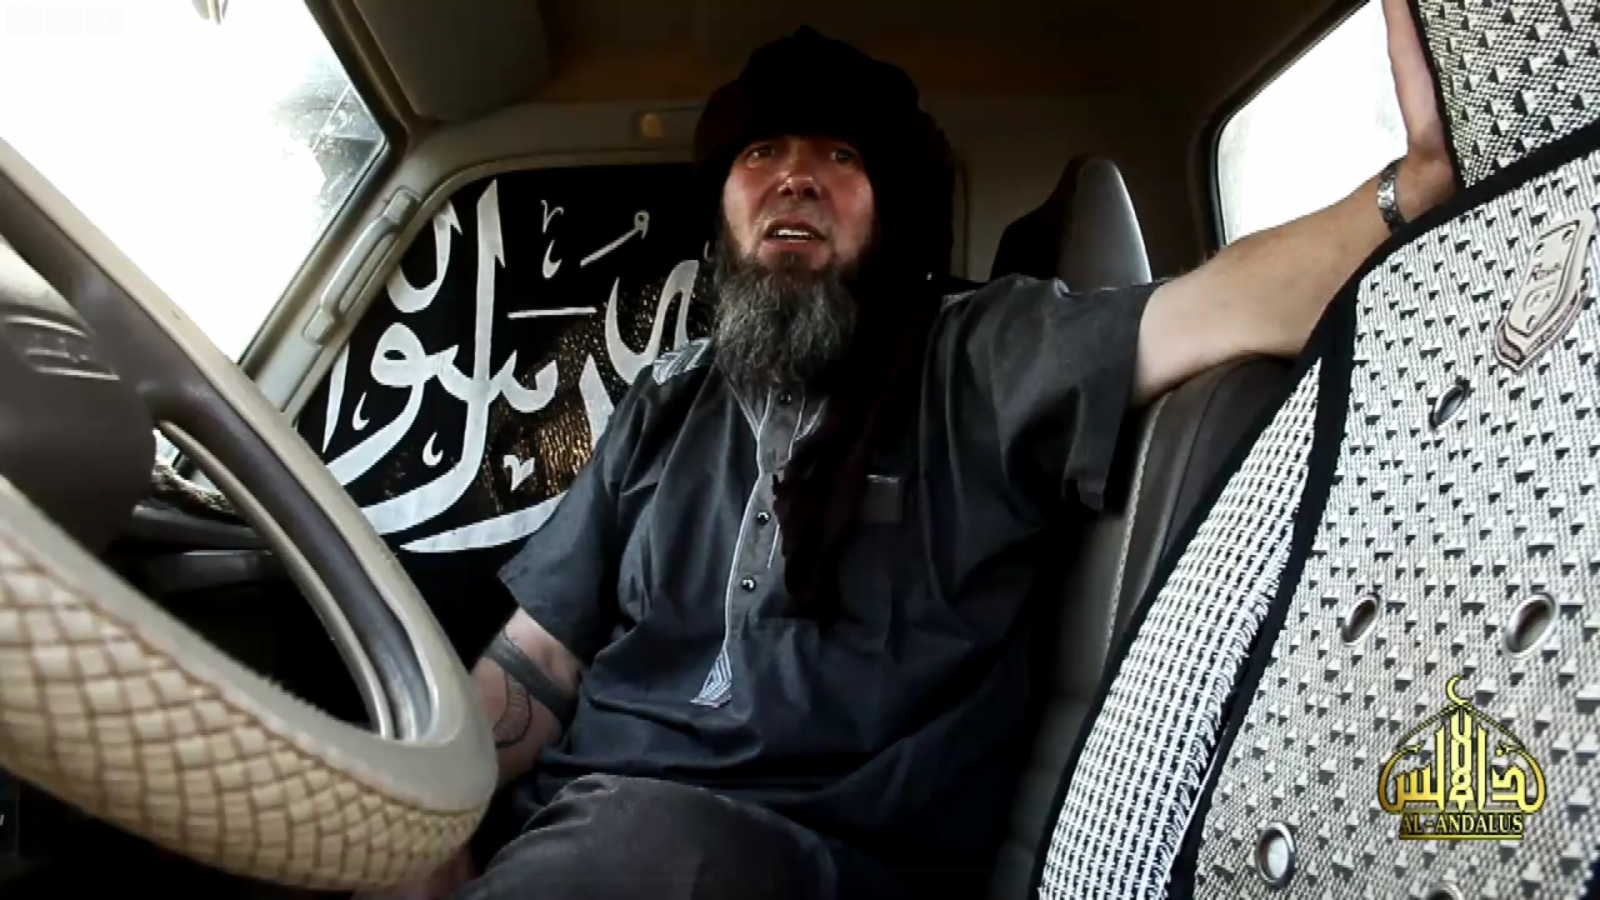 French hostage Serge Lazarevic AQIM al-qaeda Video